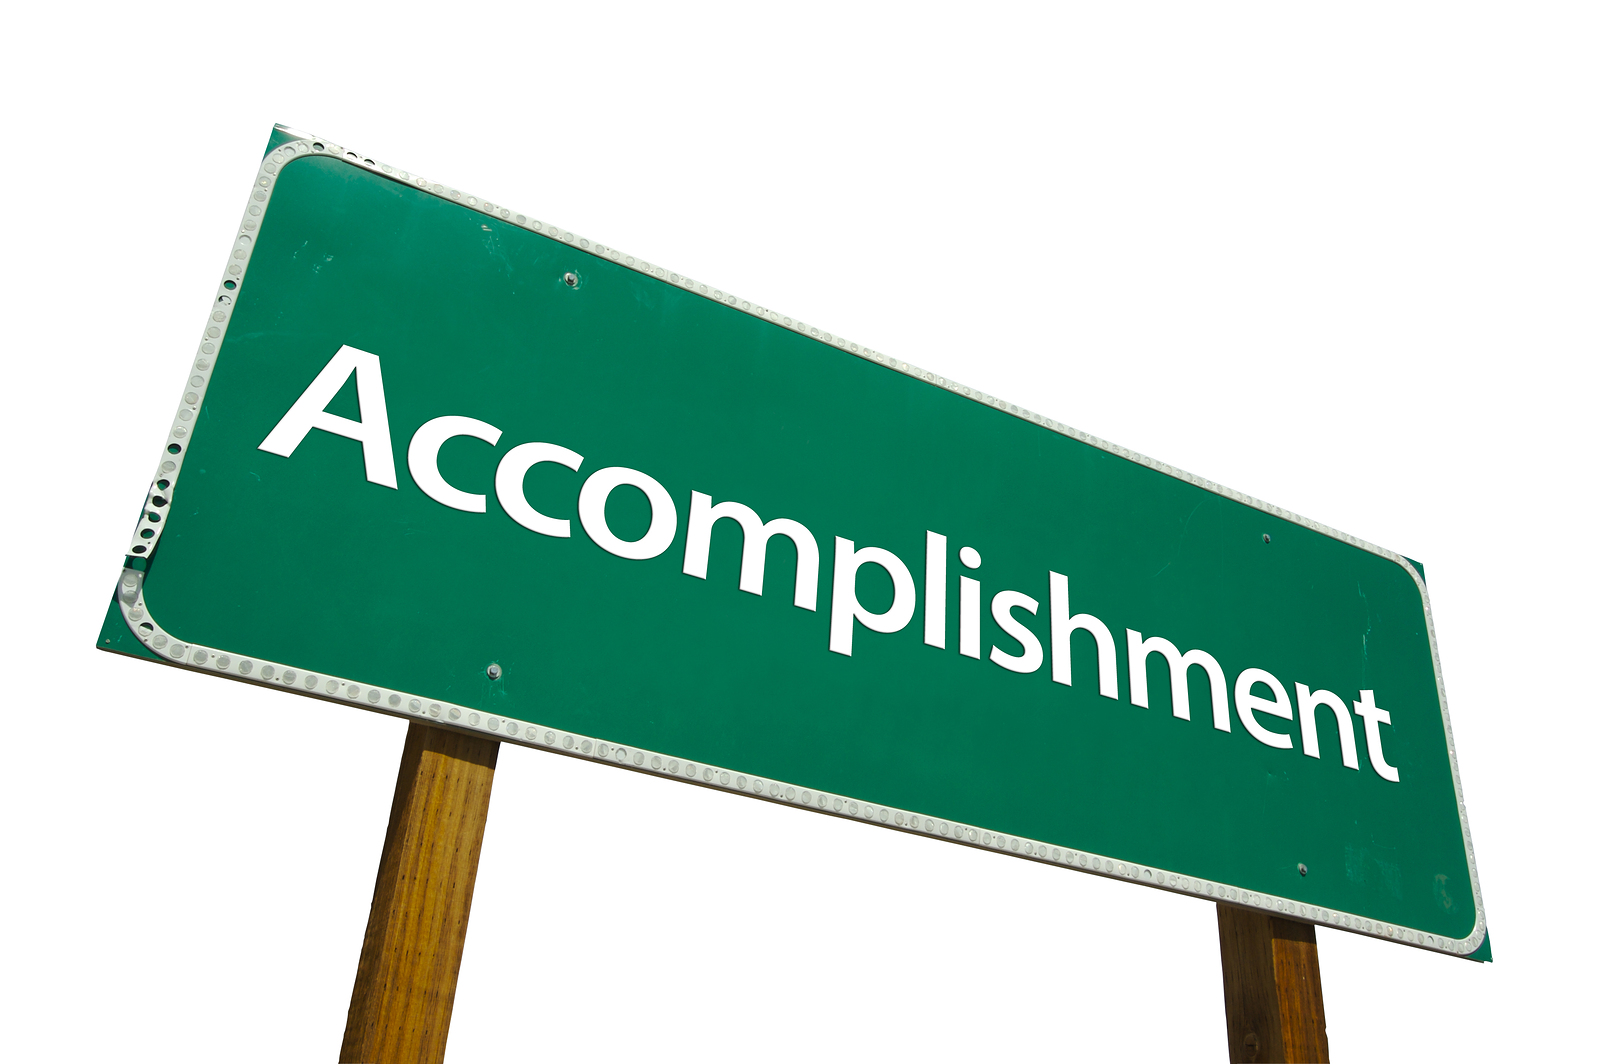 accomplishment images